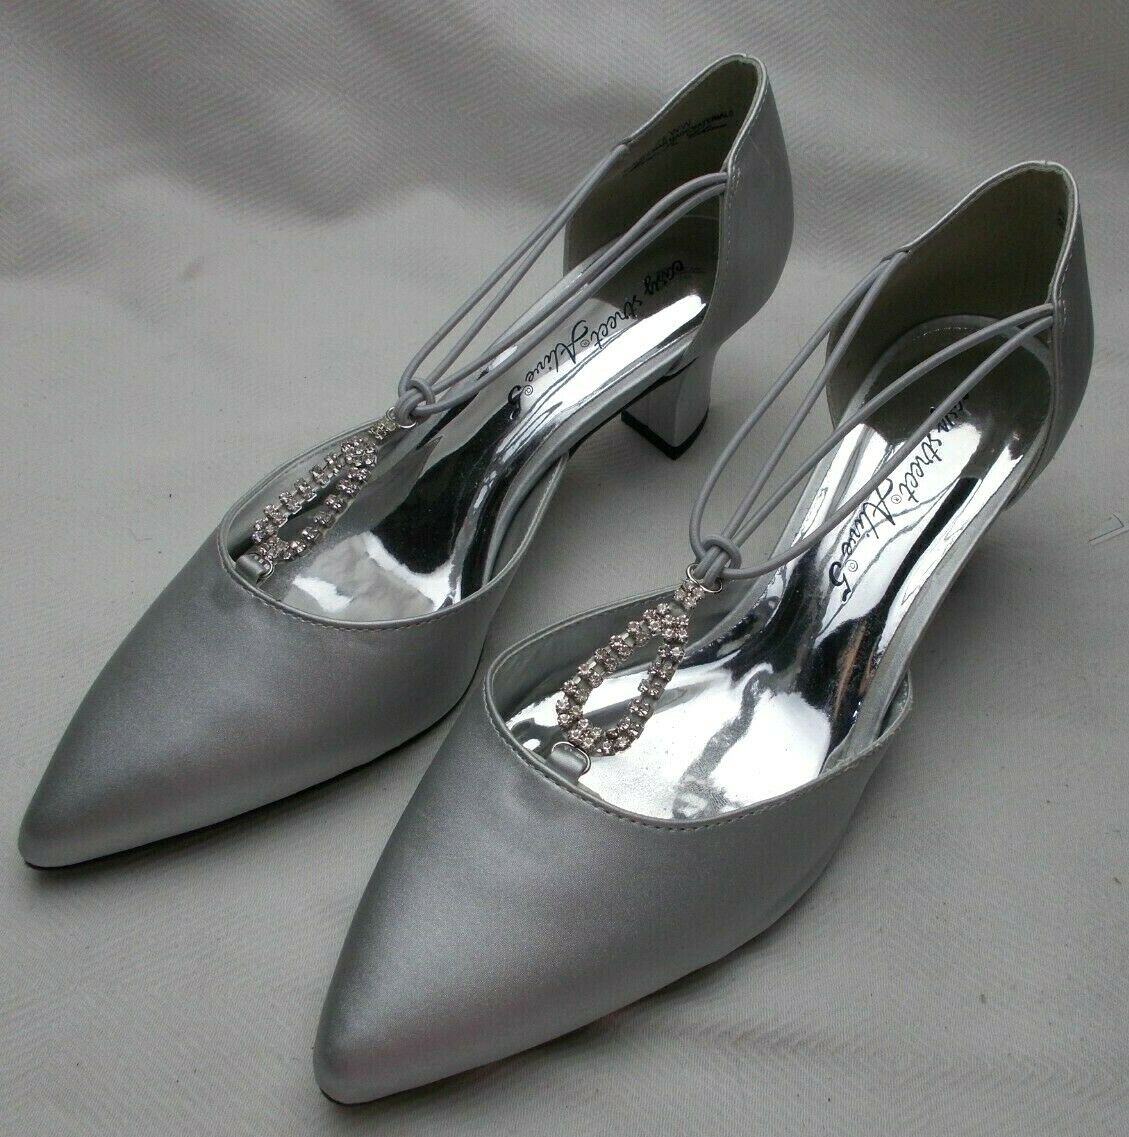 Shoes Women's Easy Street Moonlight Dress Pump Color Silver Satin Size 7.5 WW